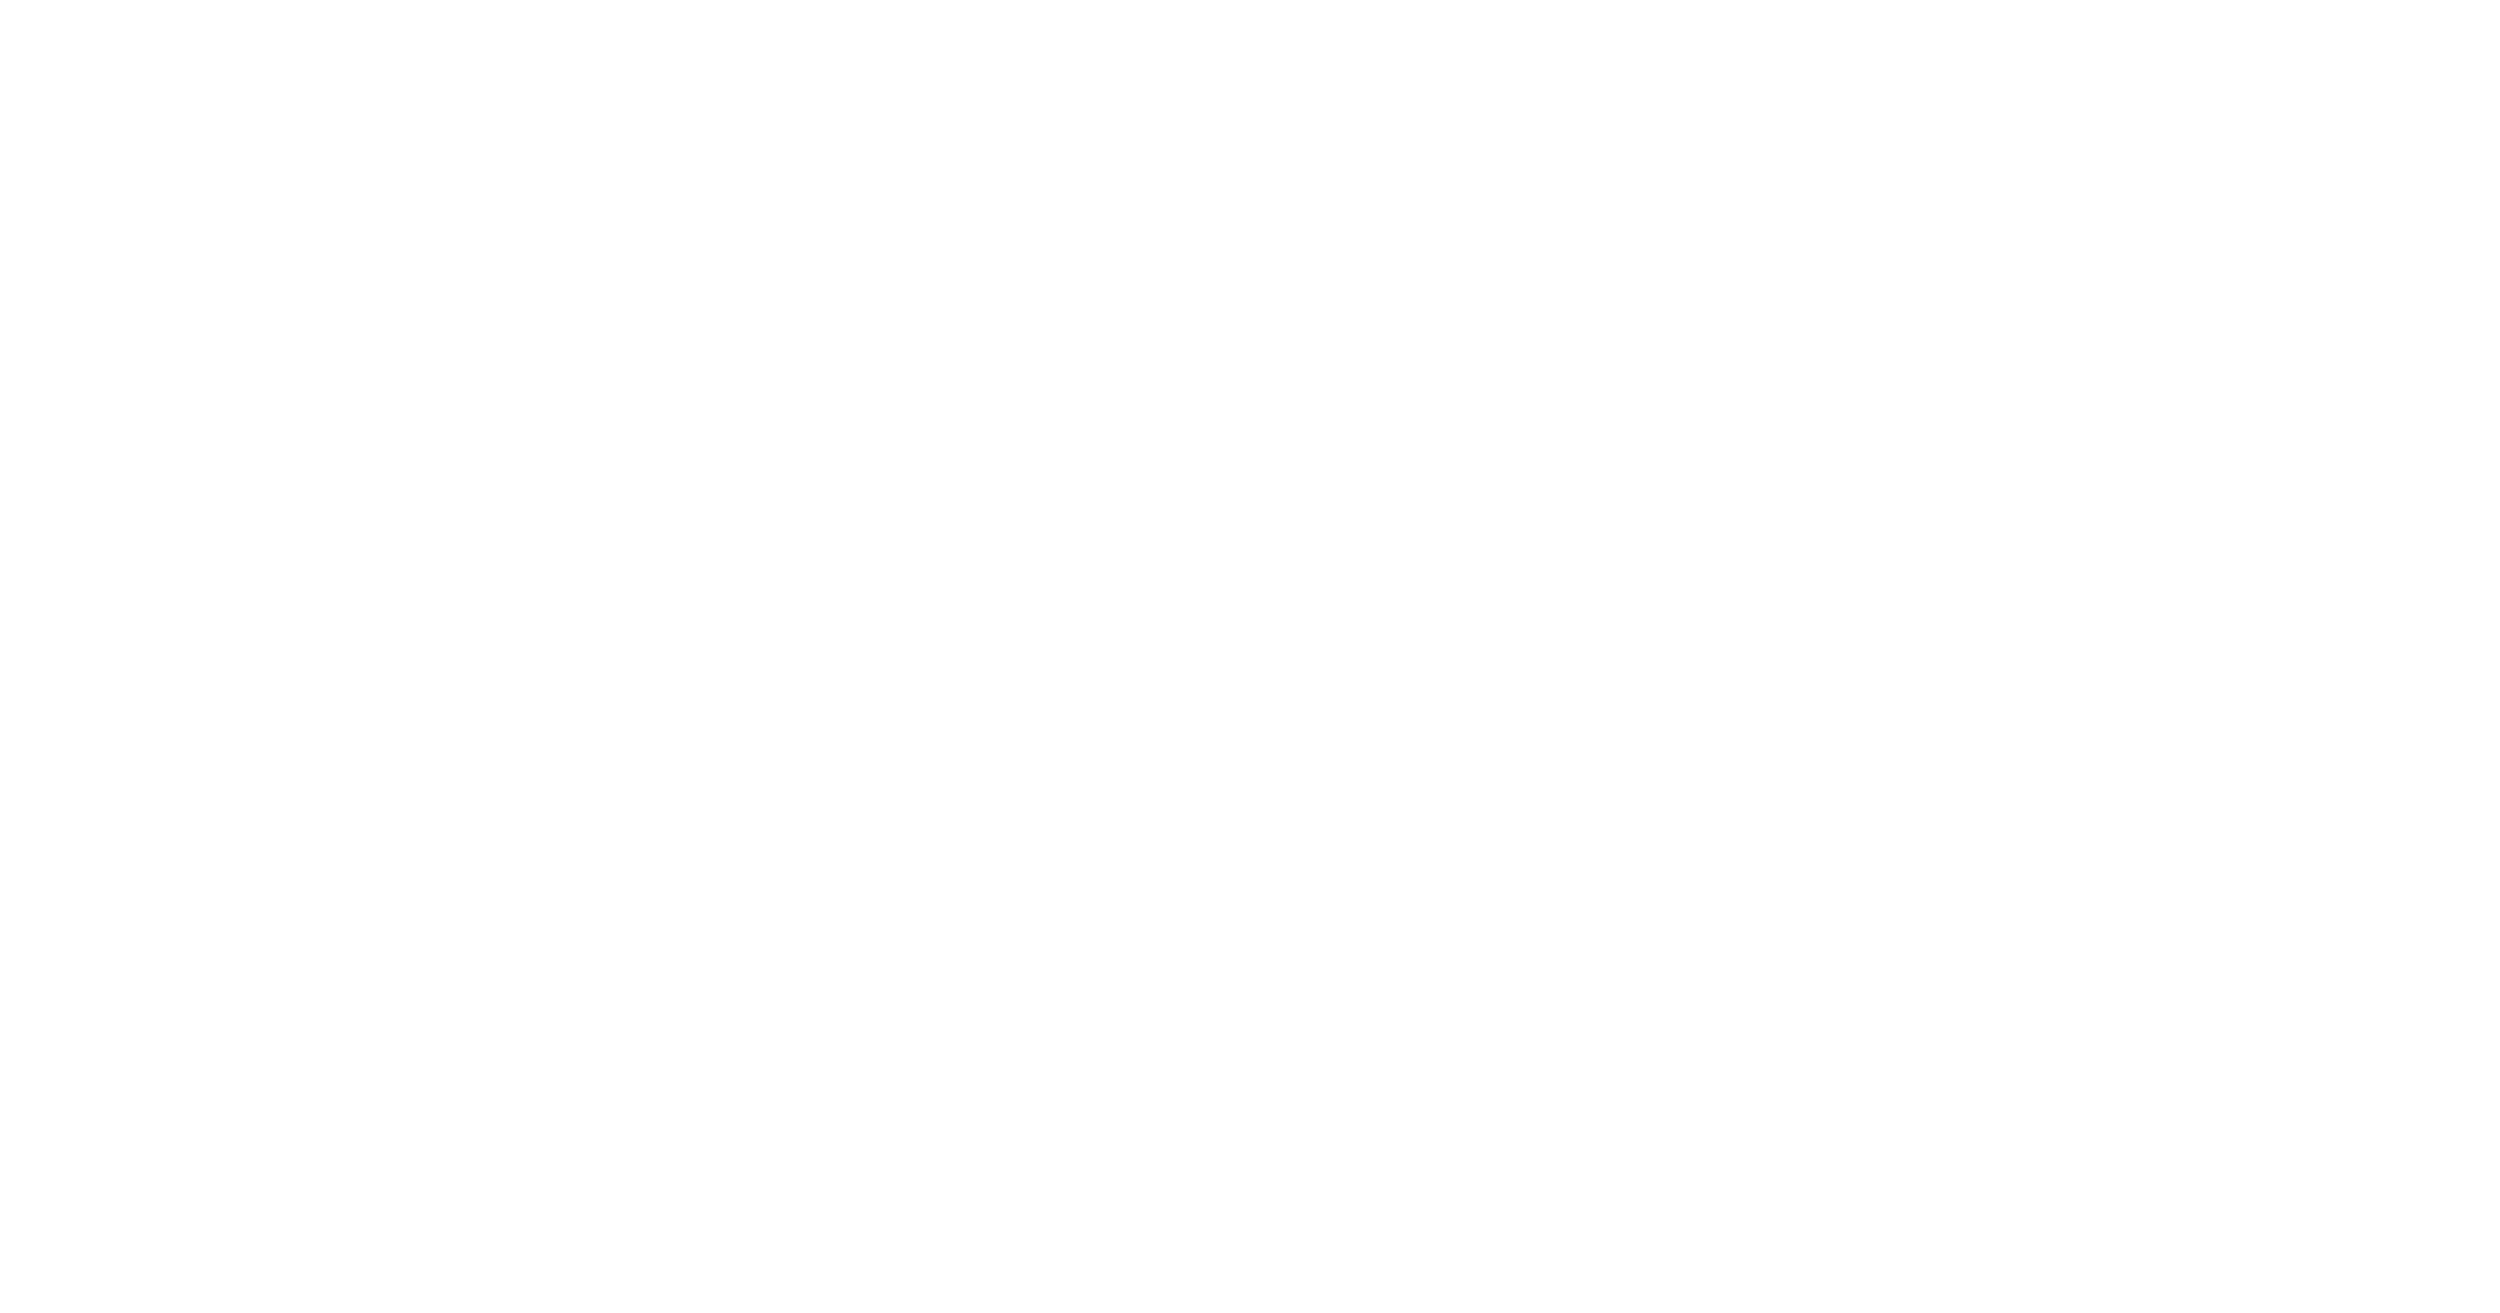 Gigglemugg® visual brand identity primary logo in white